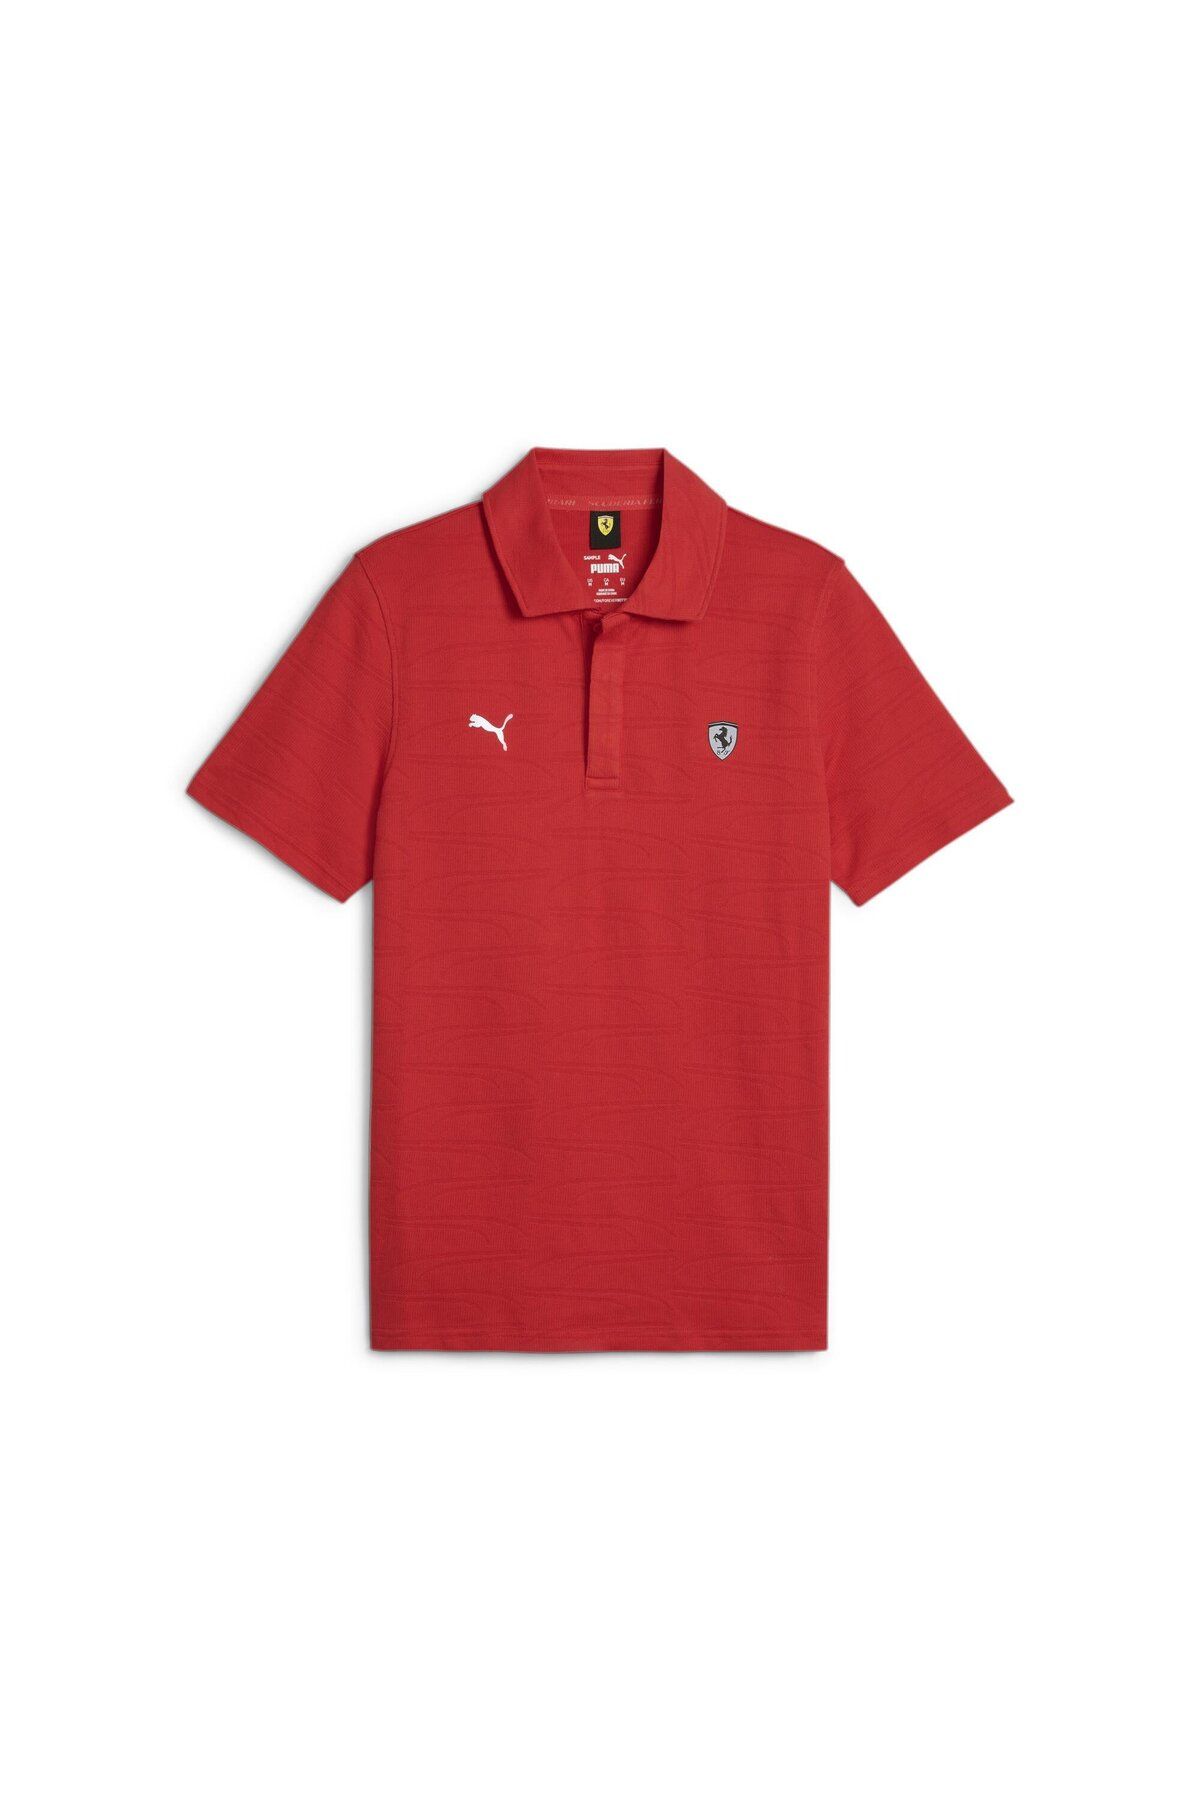 Puma Ferrari Style Jacquard Polo Erkek T-shirt